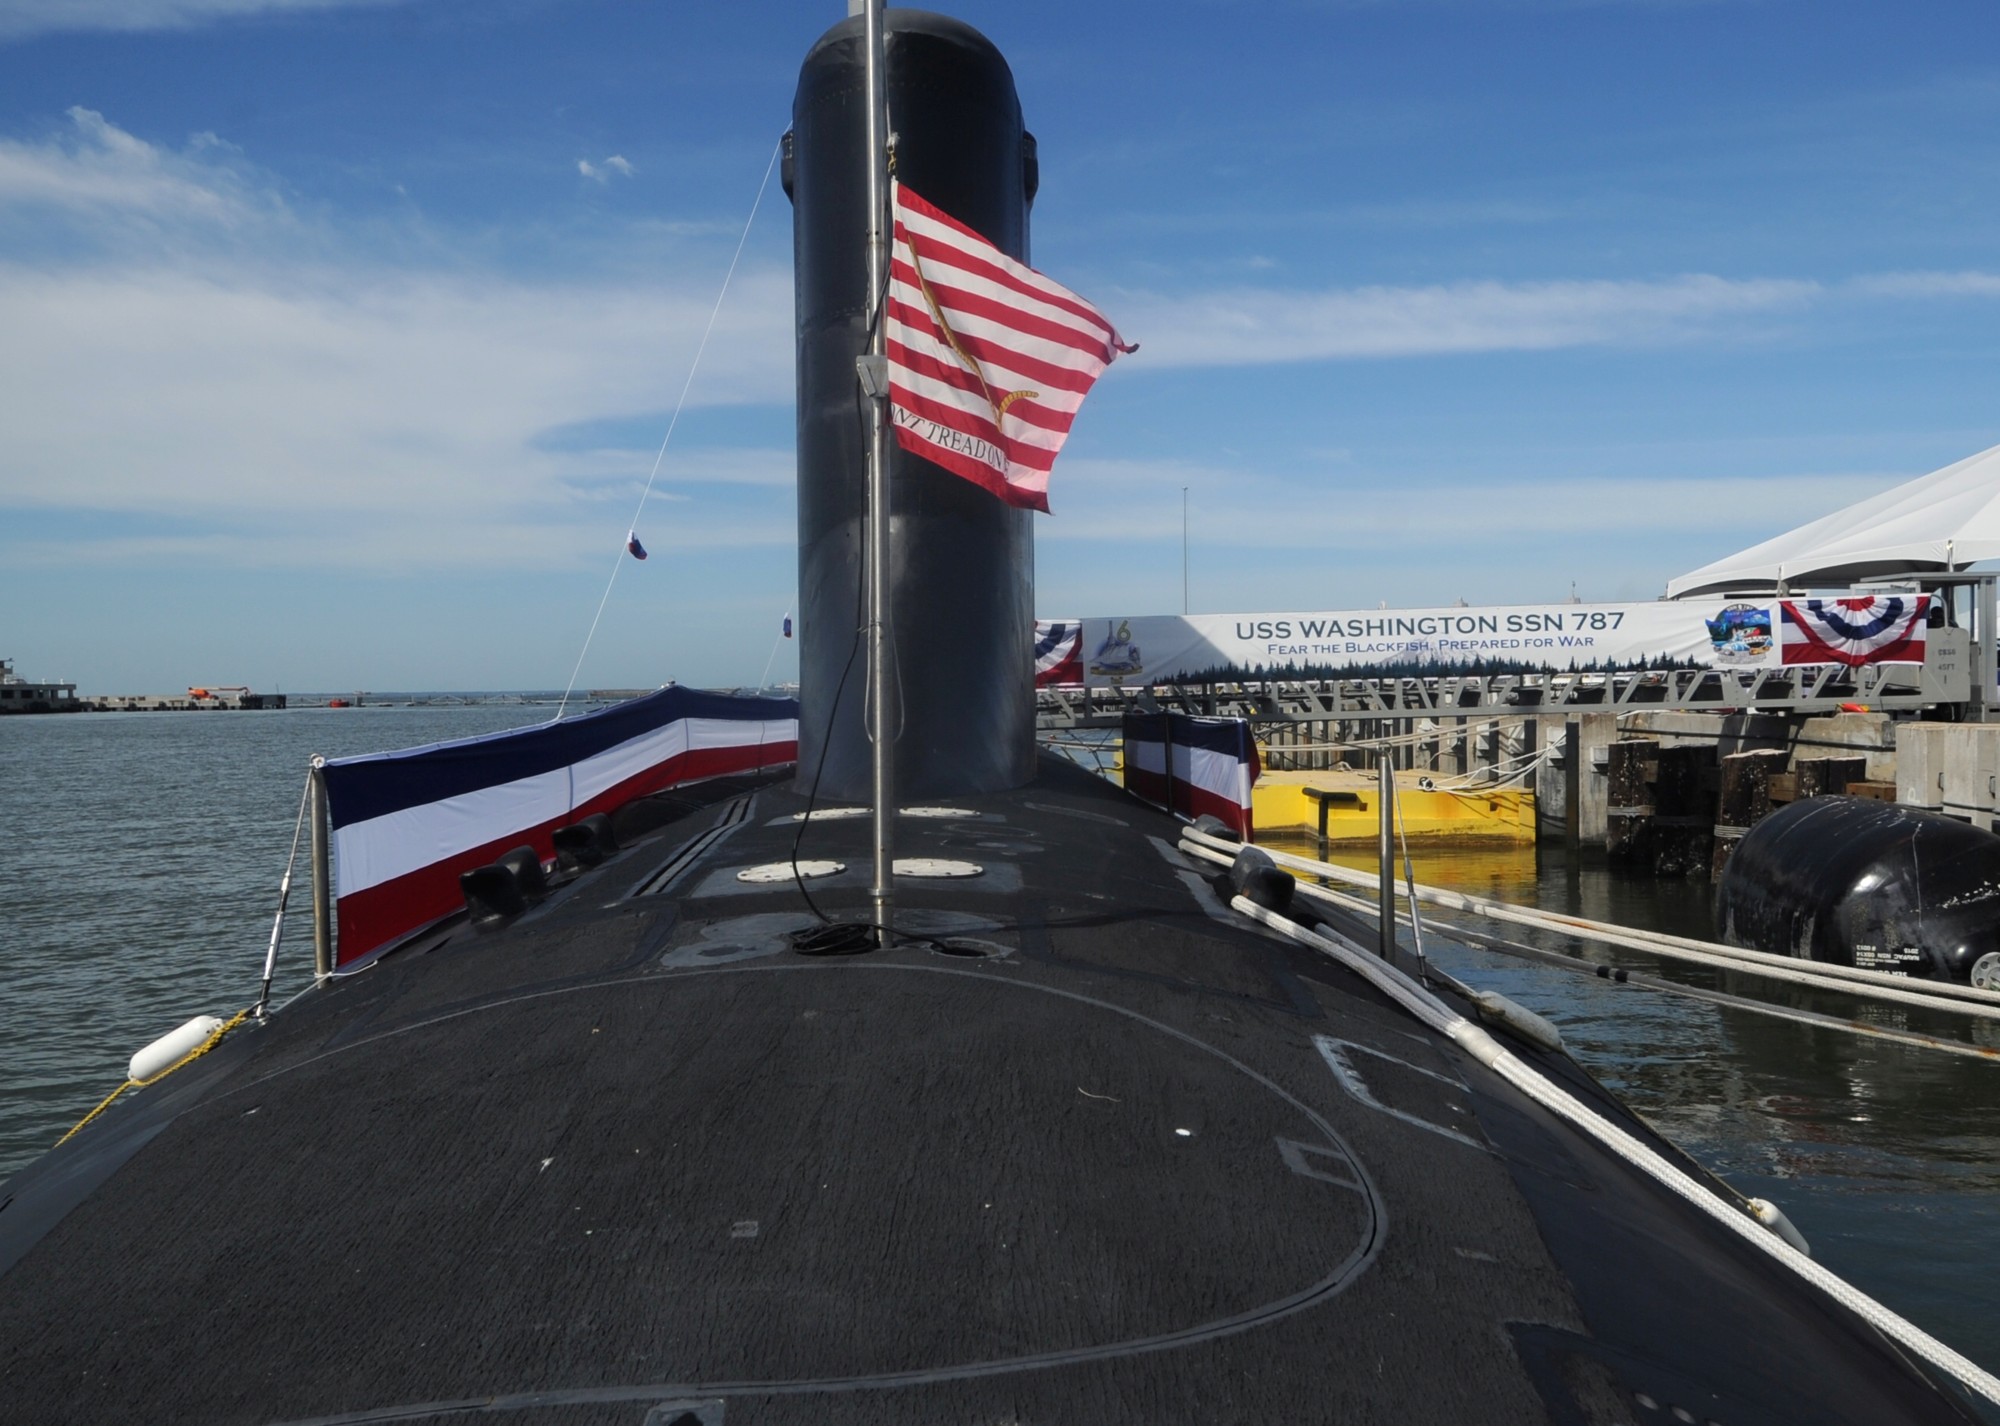 ssn-787 uss washington virginia class attack submarine us navy 37